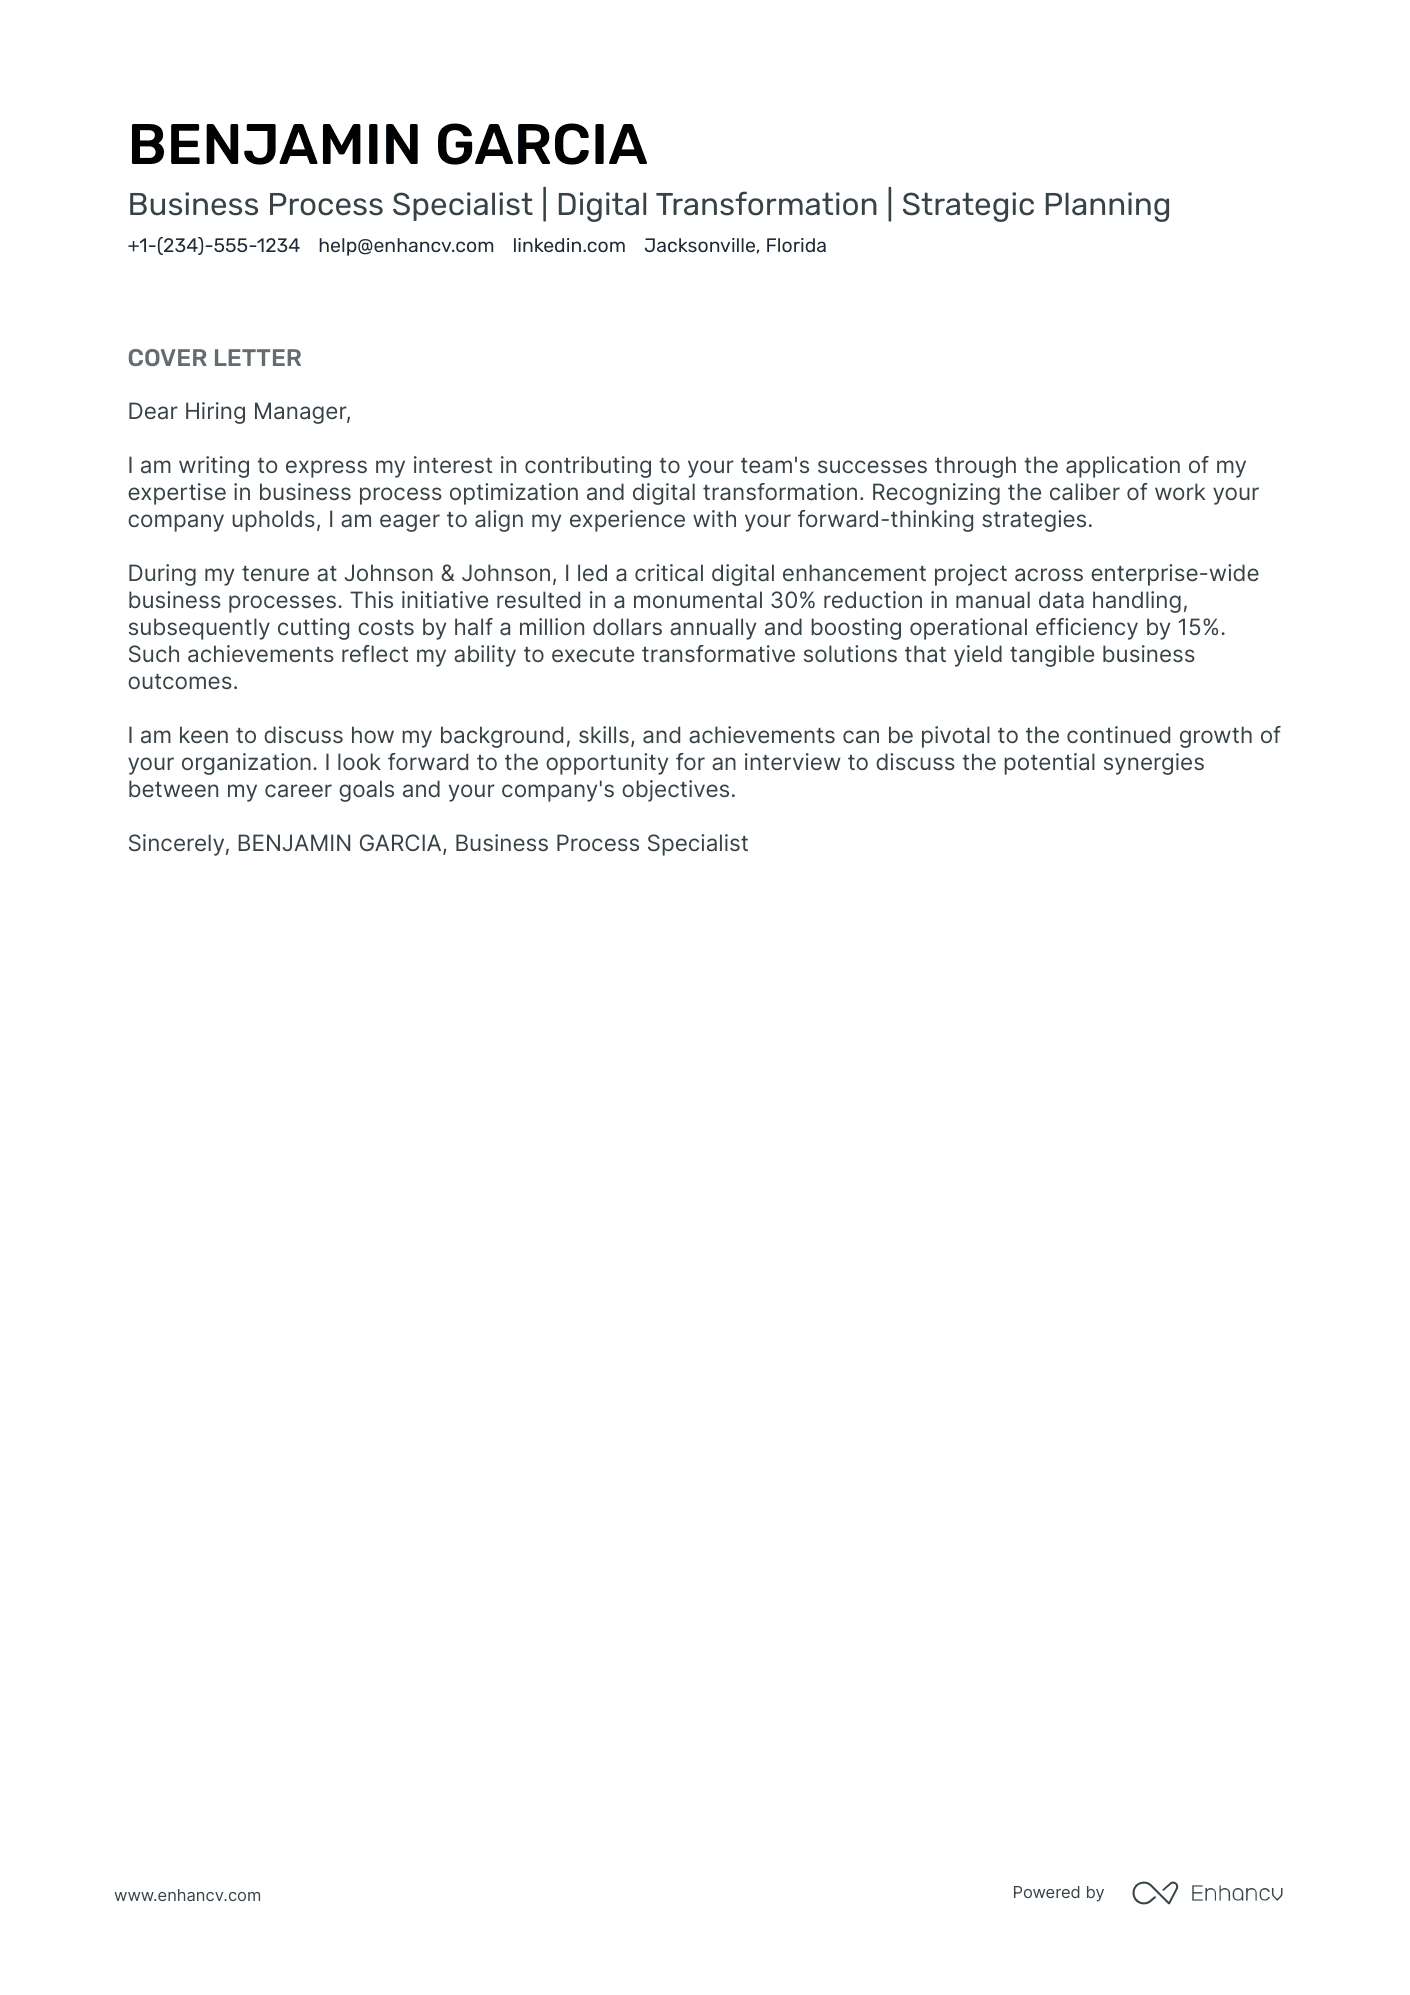 sample cover letter for director position